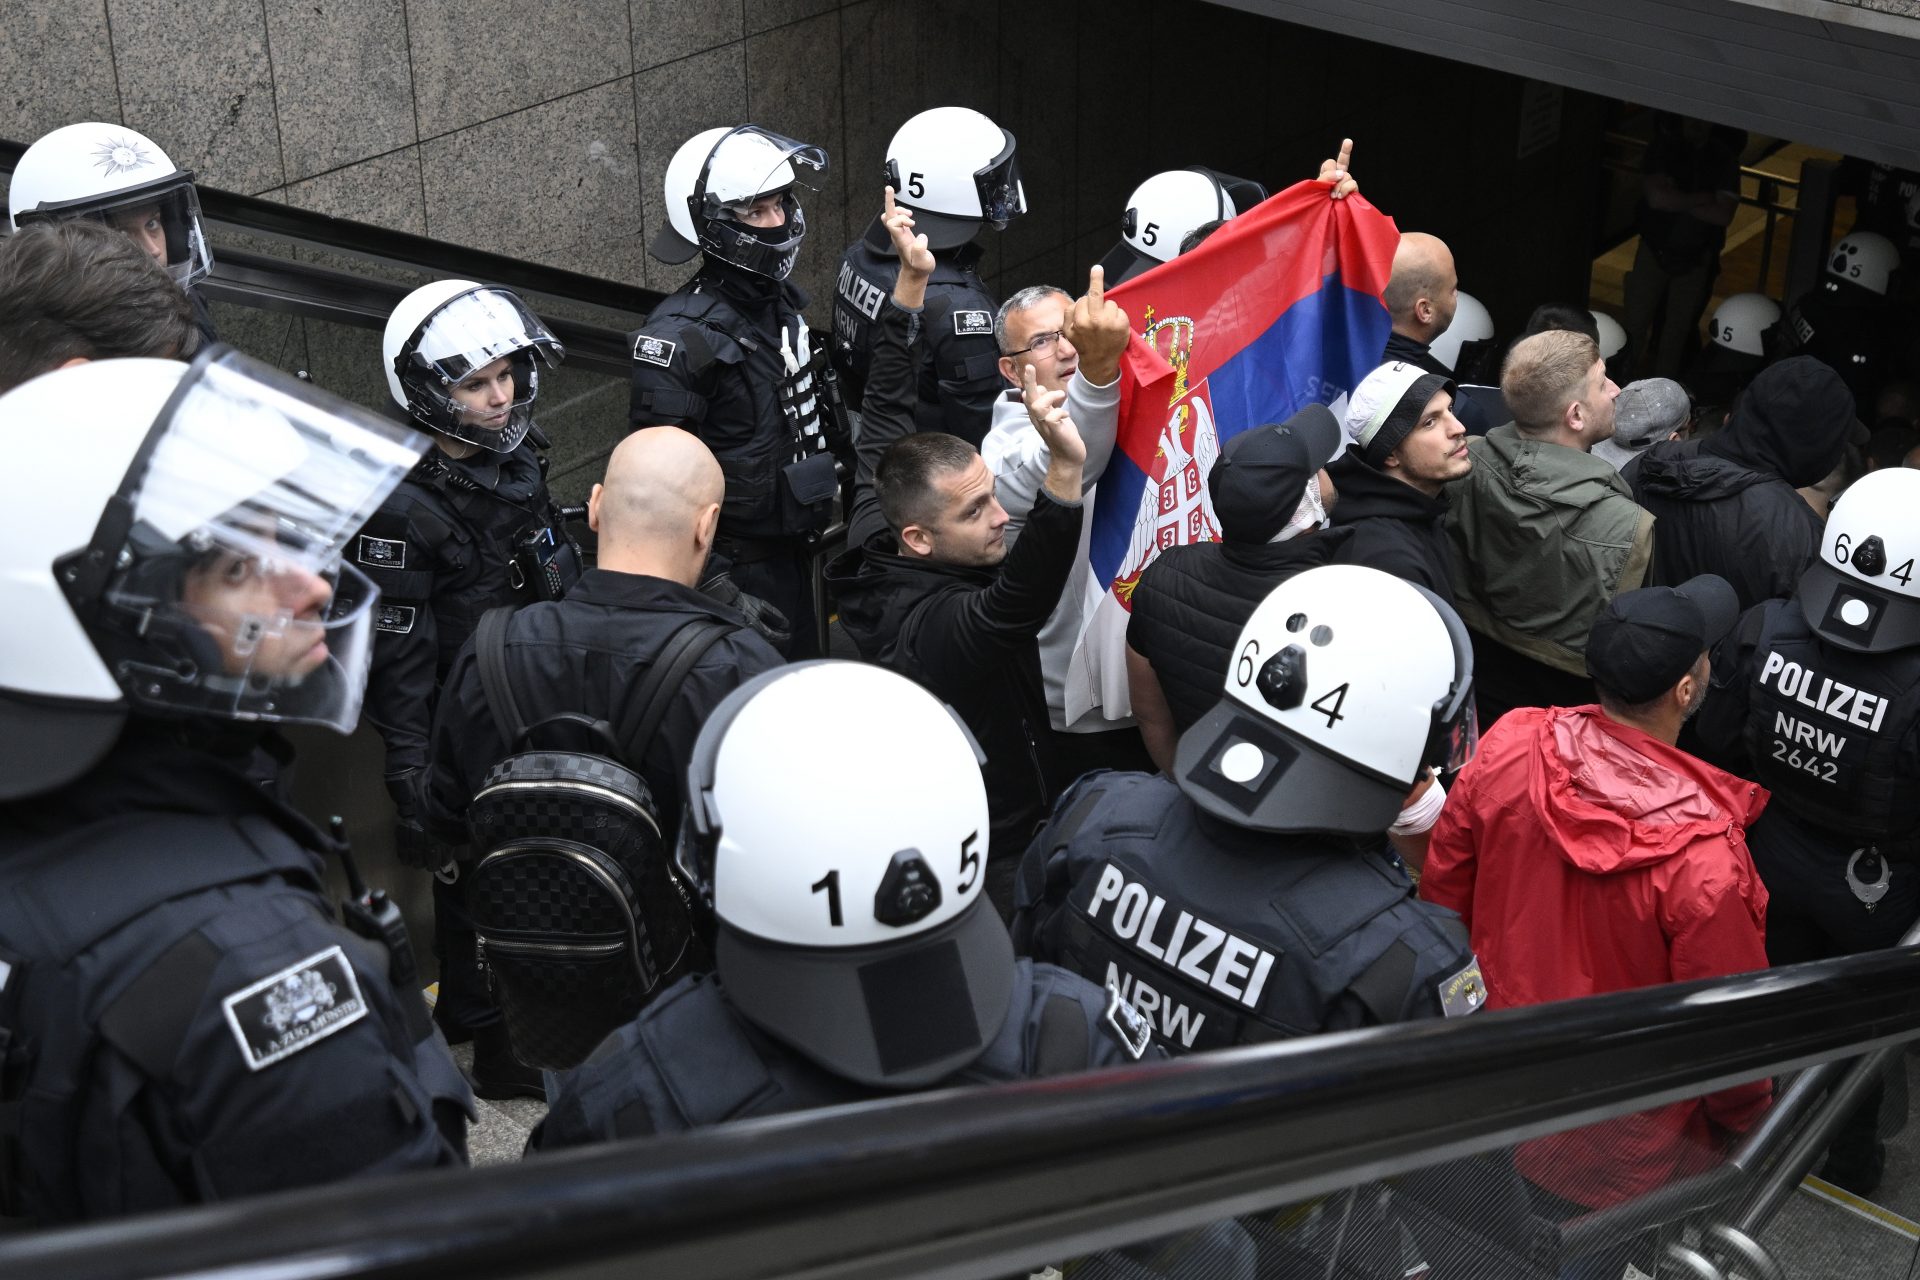 Danilo Vucic, the Serbian president's son, has ties to Serbian football hooligans?